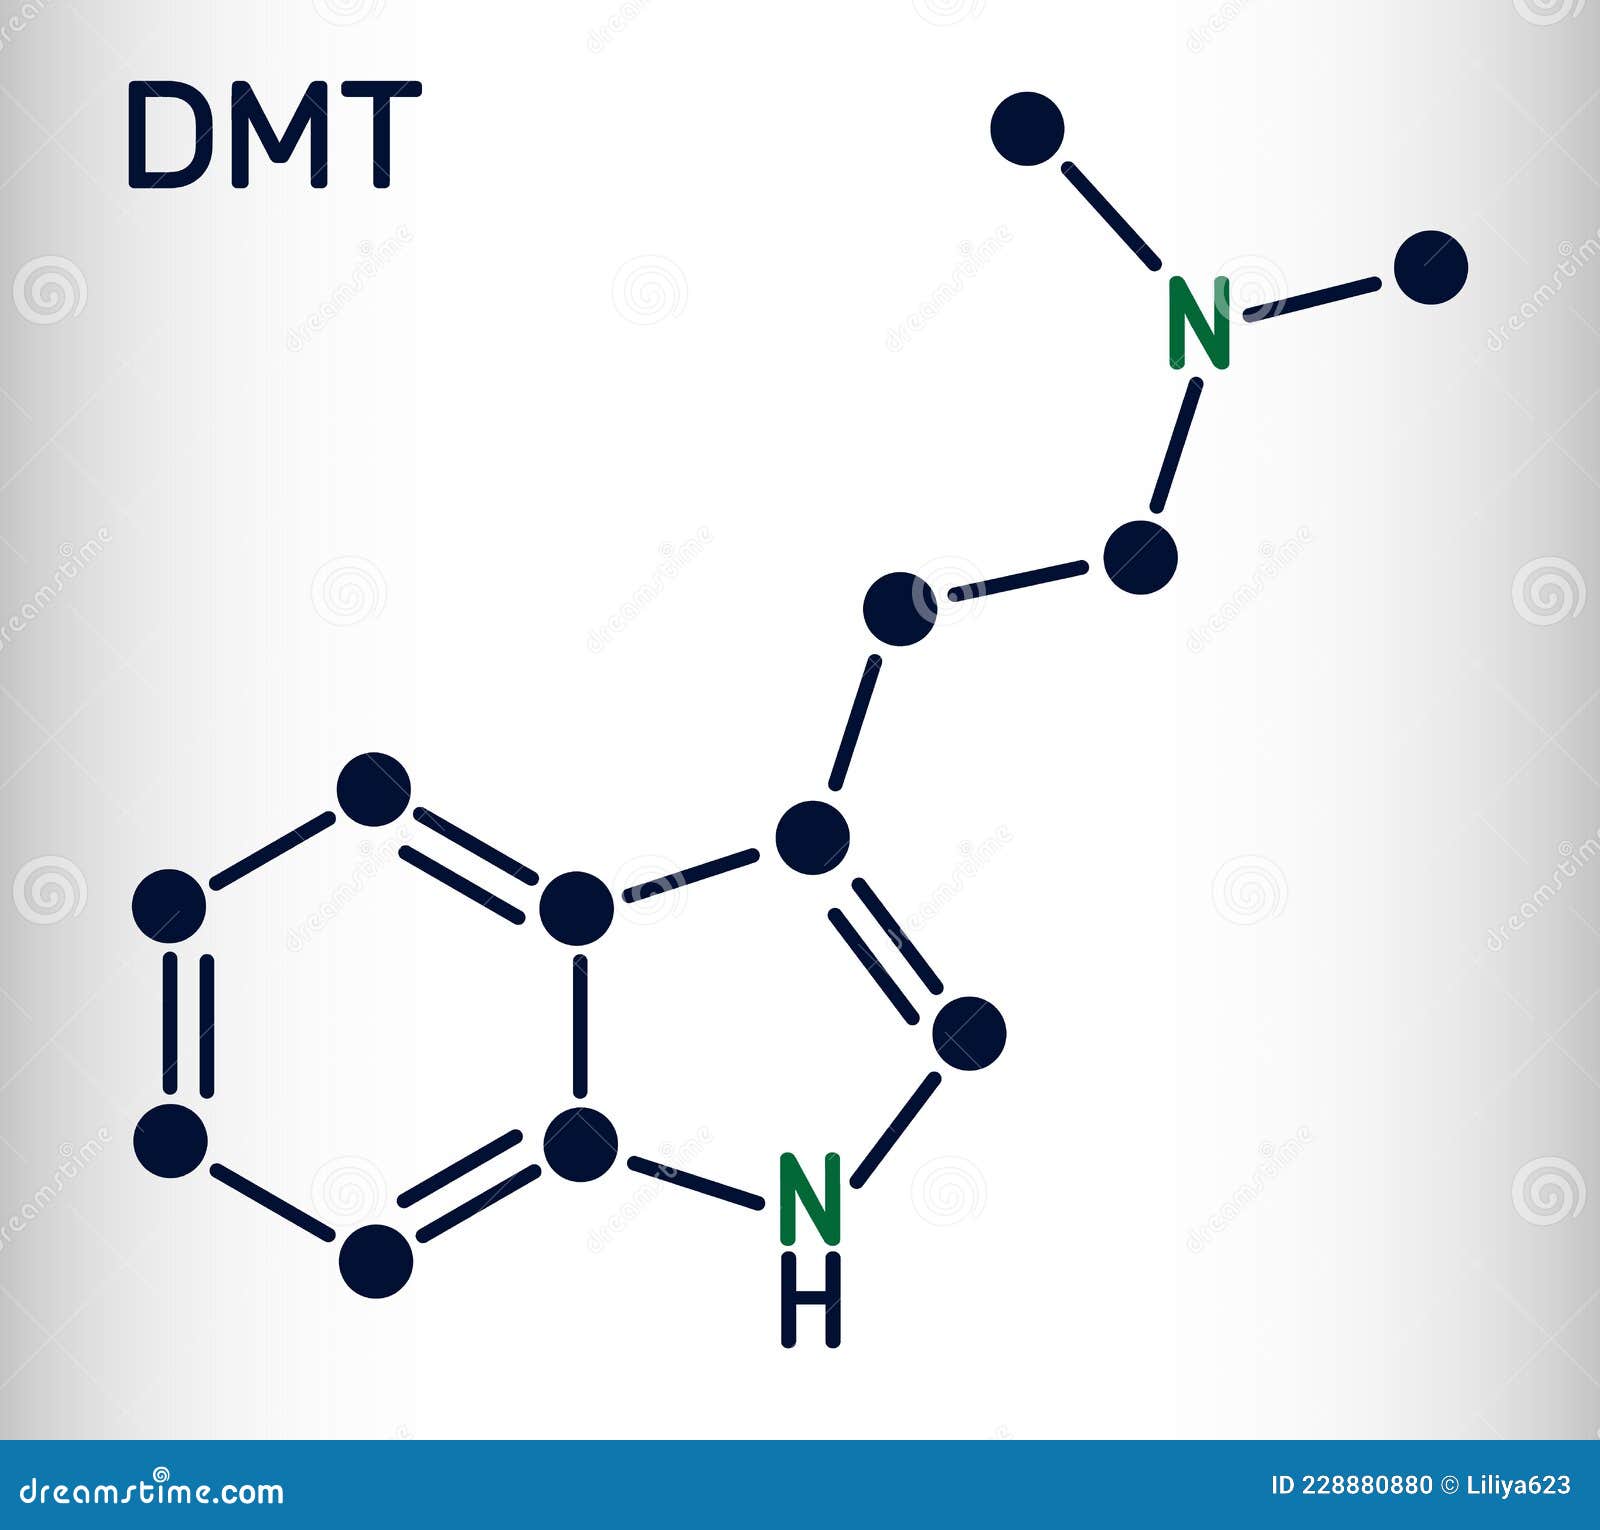 n,n-dimethyltryptamine, dimethyltryptamine, dmt molecule. it is tryptamine alkaloid, indoleamine derivative, serotonergic